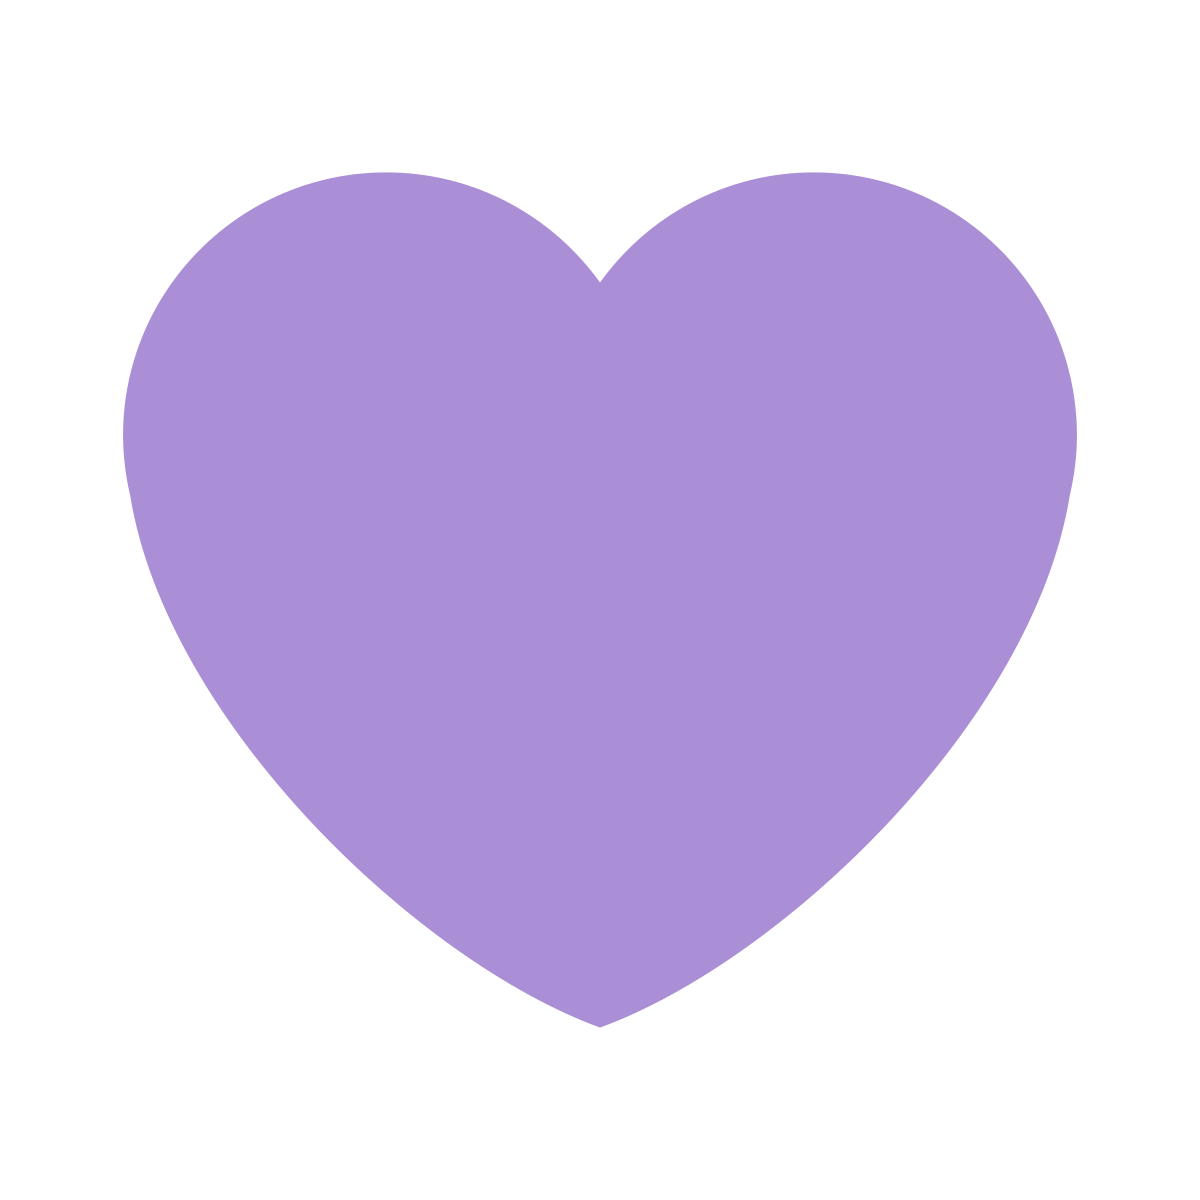 Purple Heart PNG HD Quality